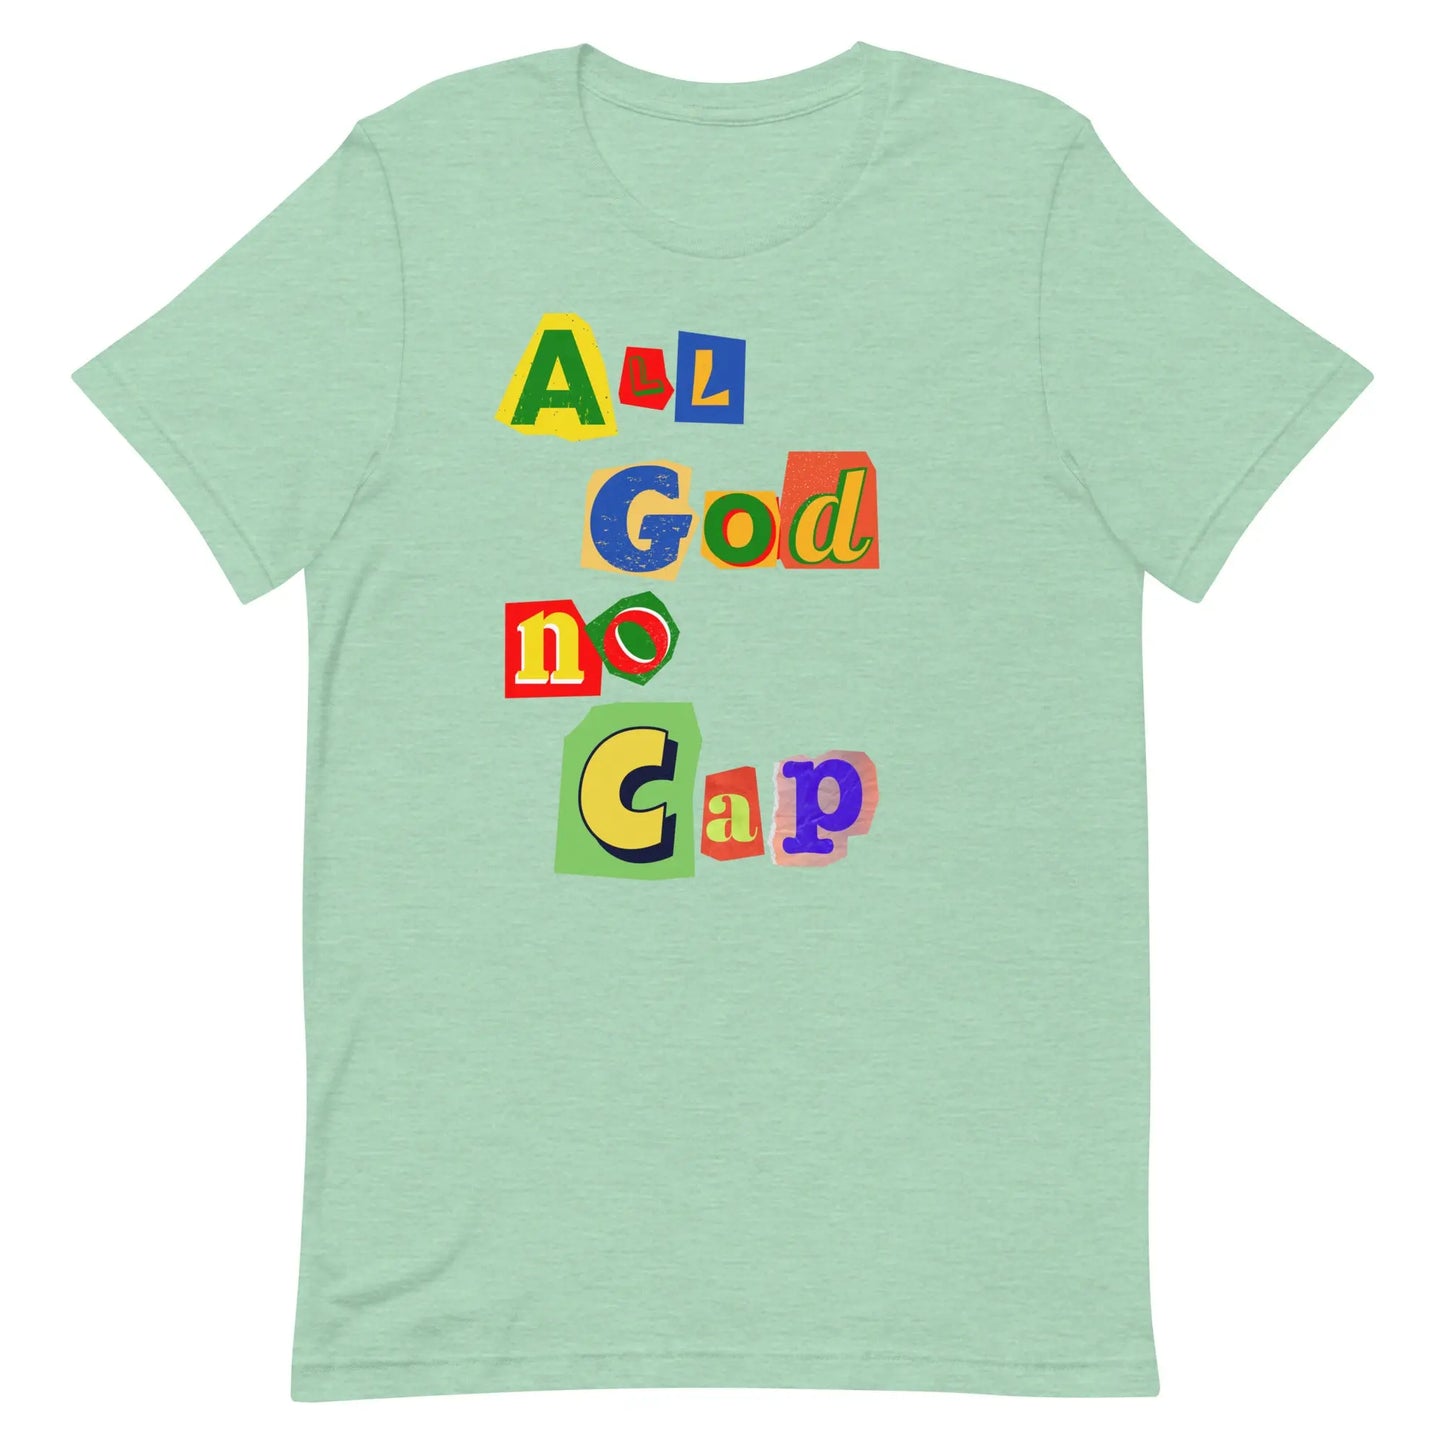 Unisex 90's themed ALL GOD NO CAP t-shirt